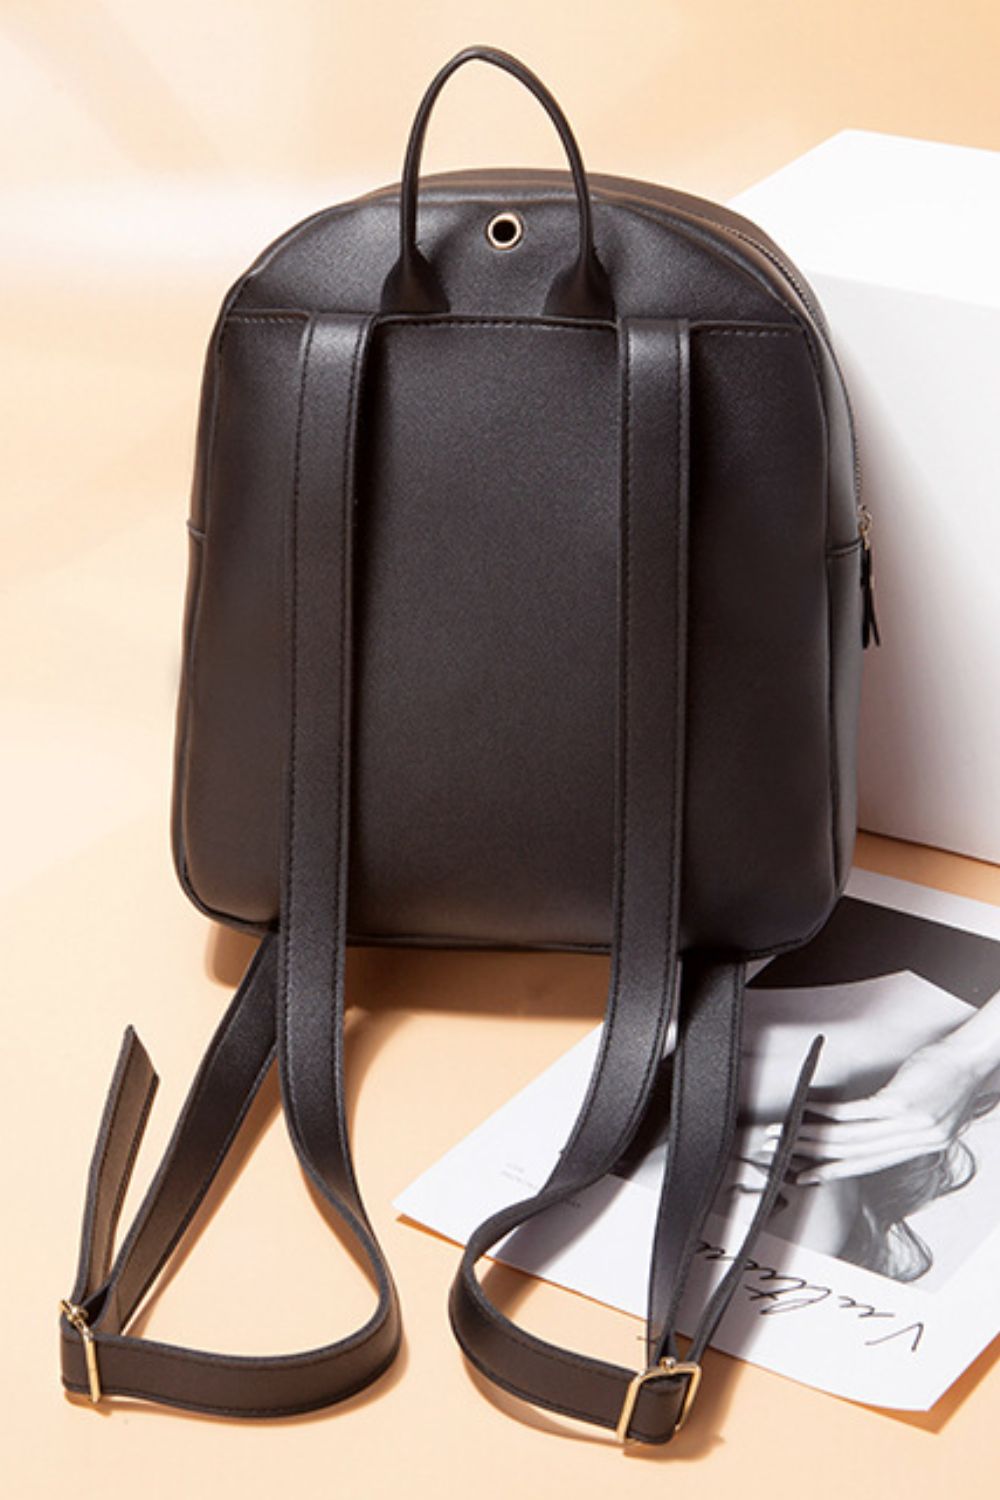 Handbags: Studded PU Leather Backpack